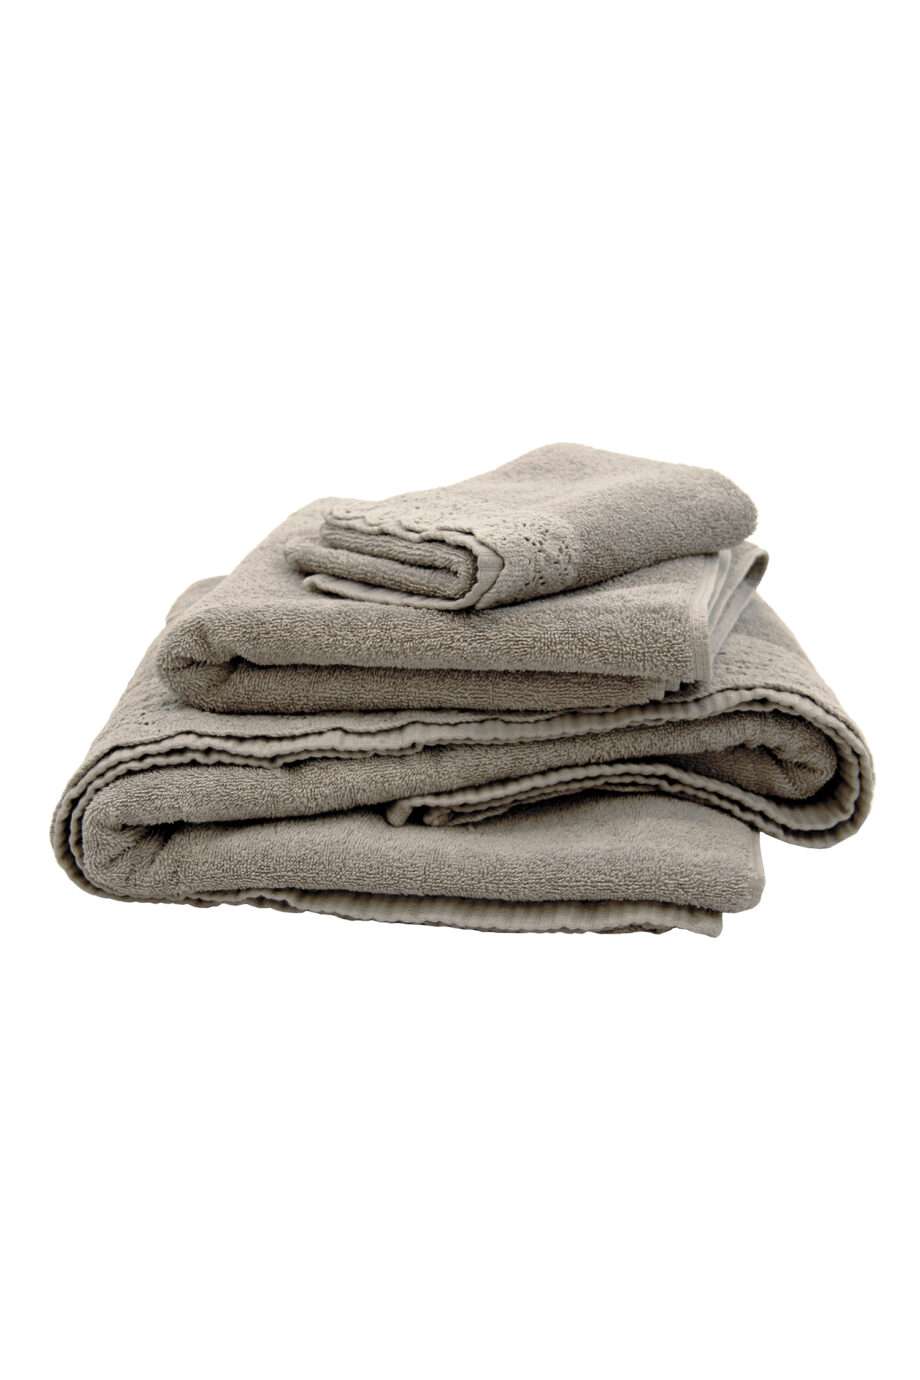 corsica light grey woven cotton towel set